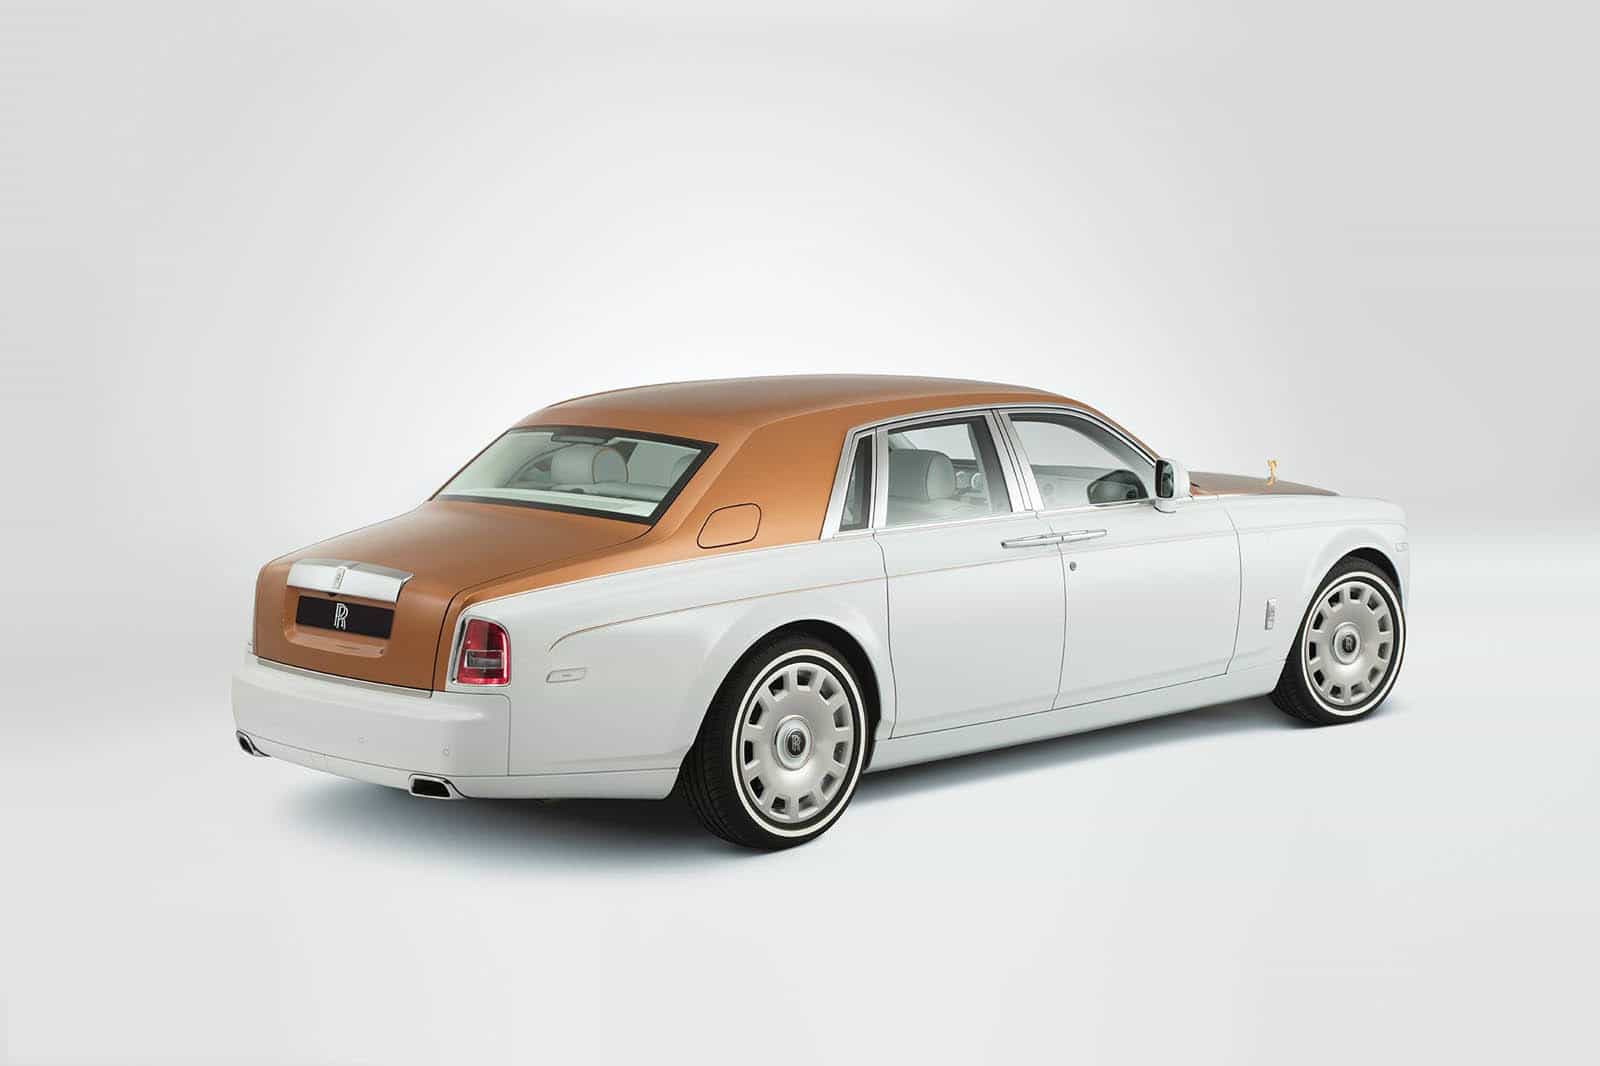 Rolls-Royce-Phantom-Sheikh-Zayed-Grand-Mosque-2